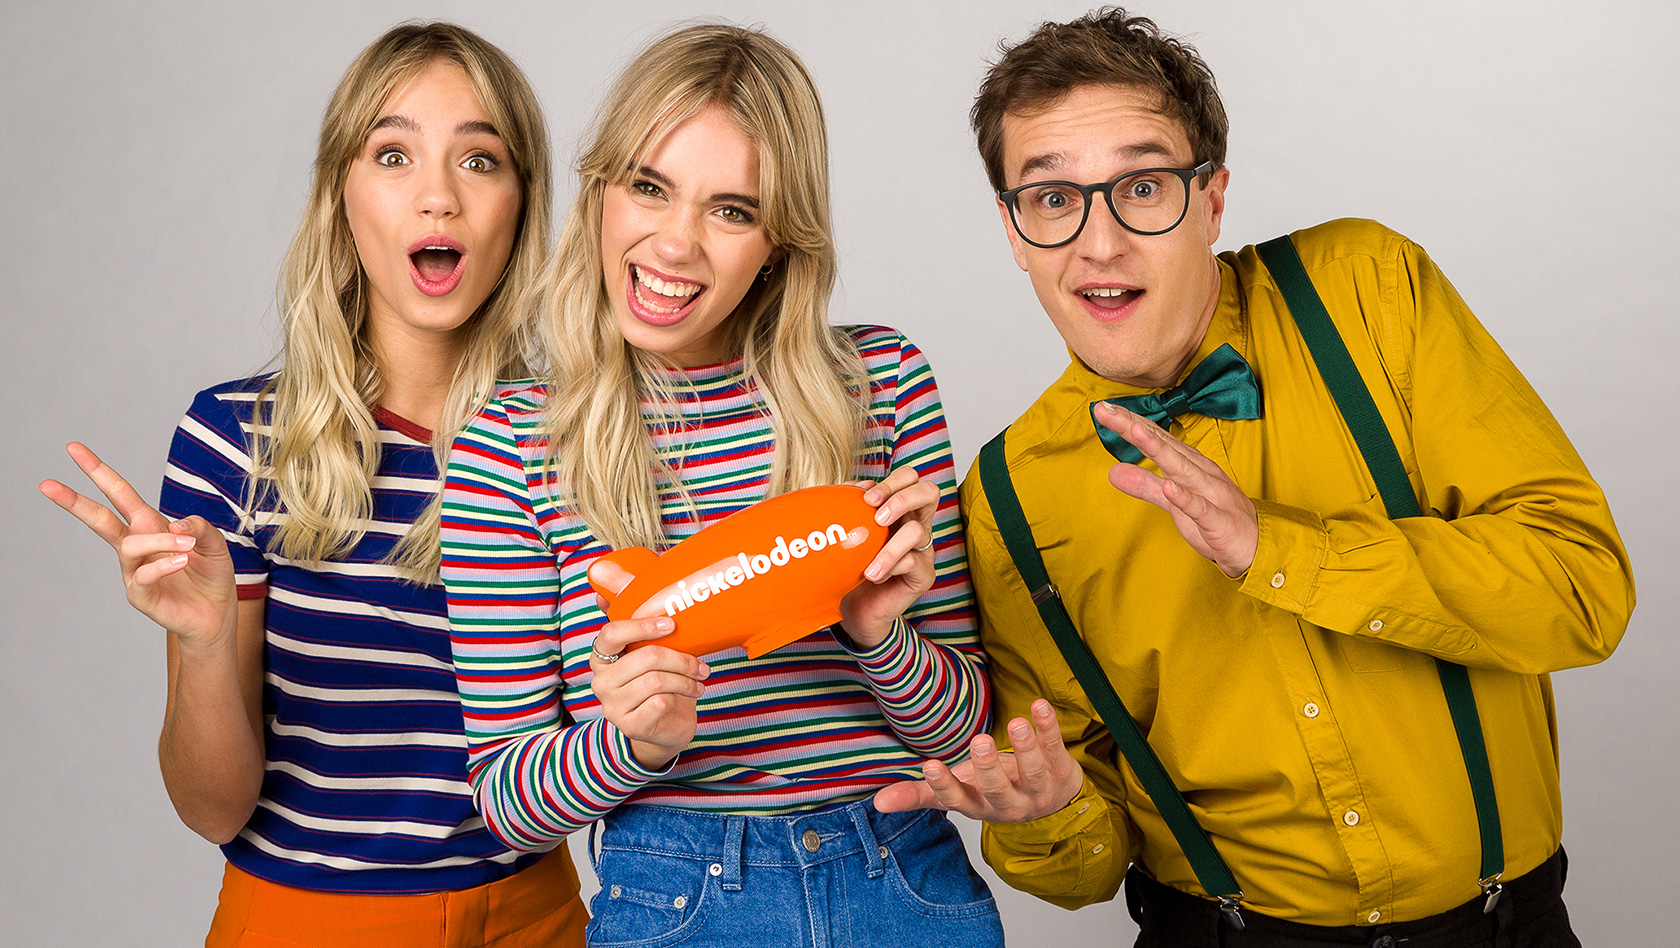 Nickelodeon Kids Choice Awards 2019 Europa-Park Stargäste